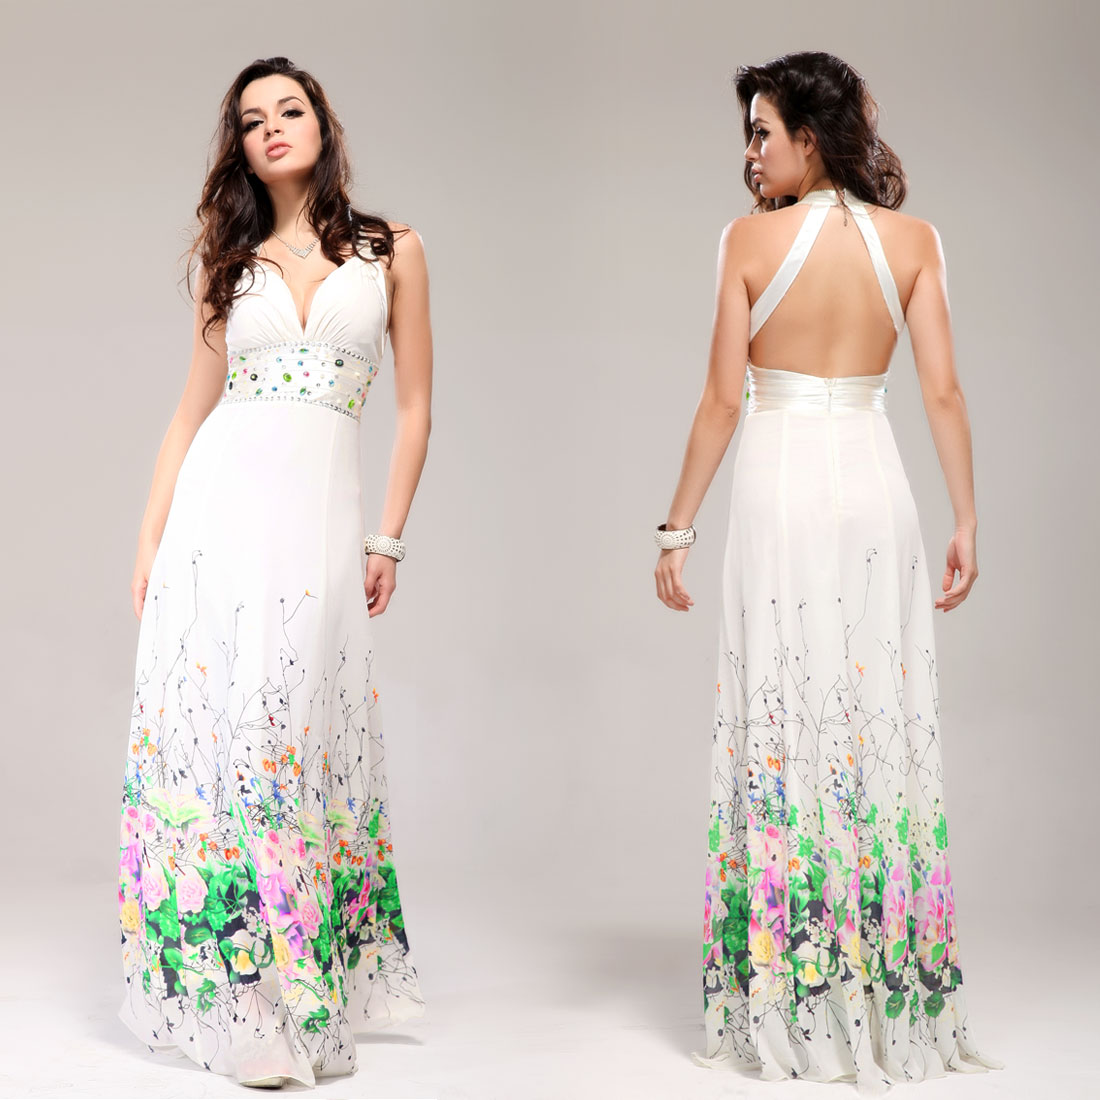 Floral Printed Charming Bridal Open Back Rhinestone Fashion Gowns 